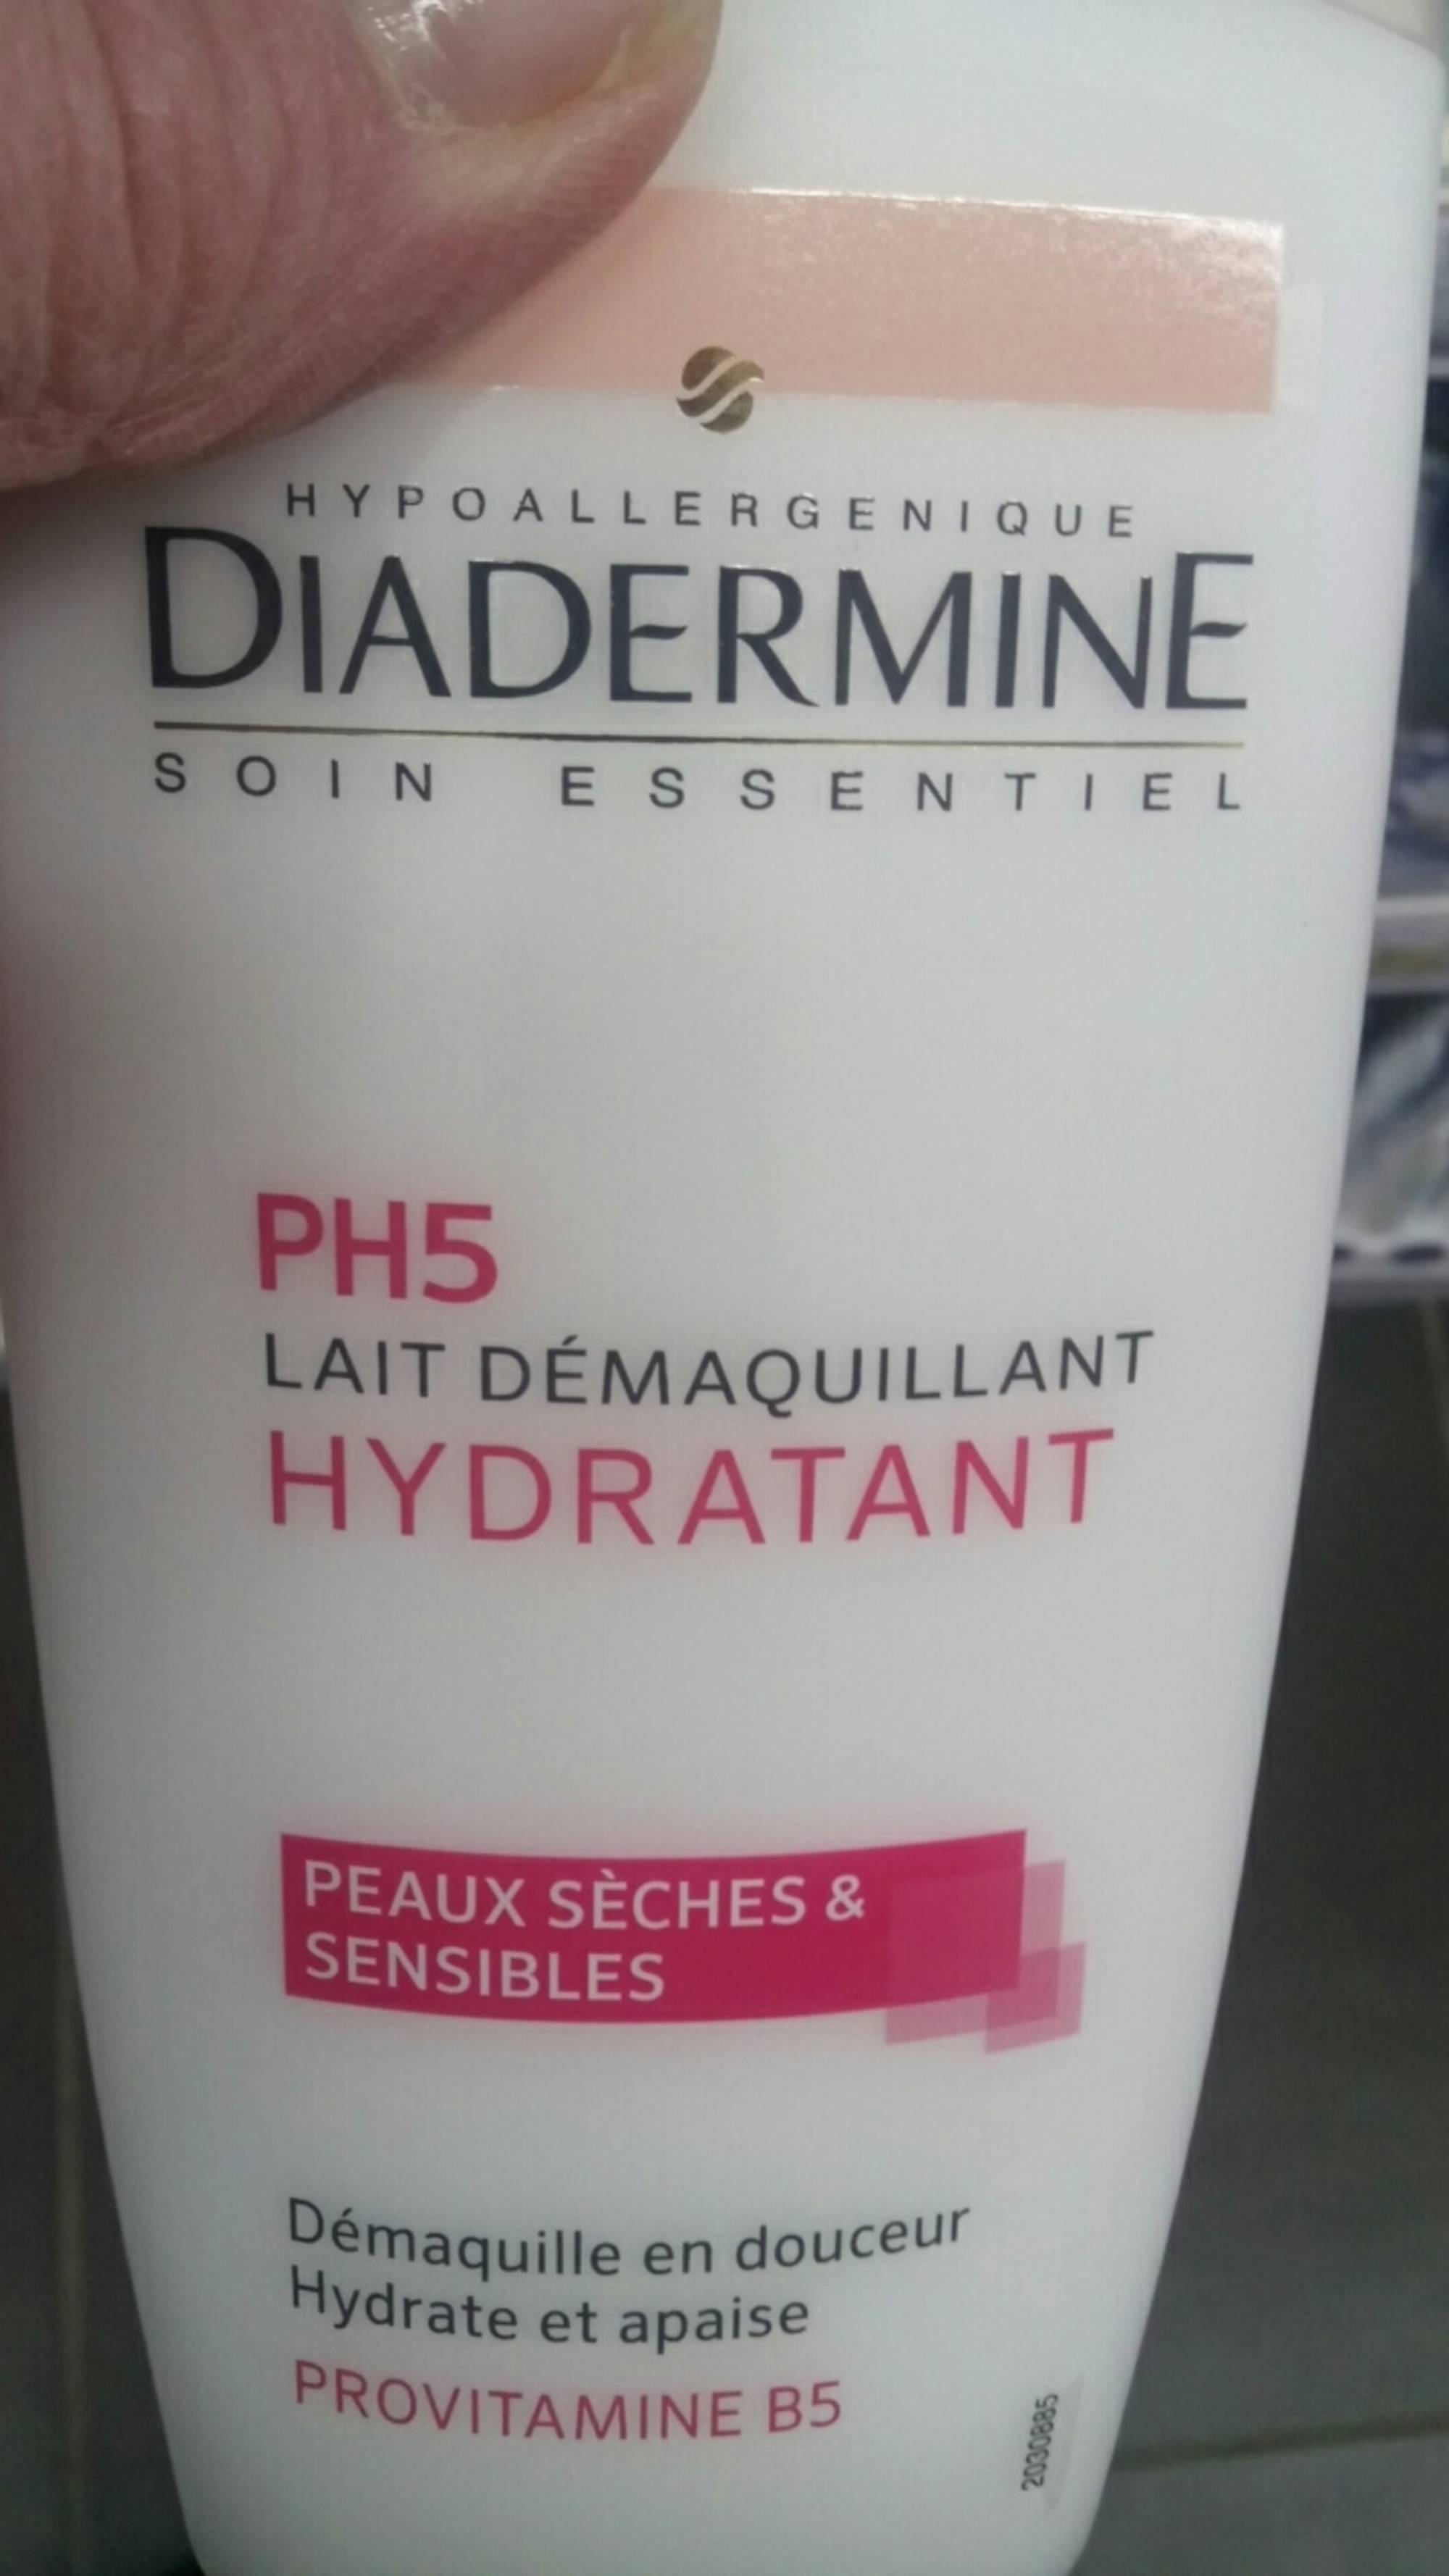 DIADERMINE - Ph5 - Lait démaquillant hydratant